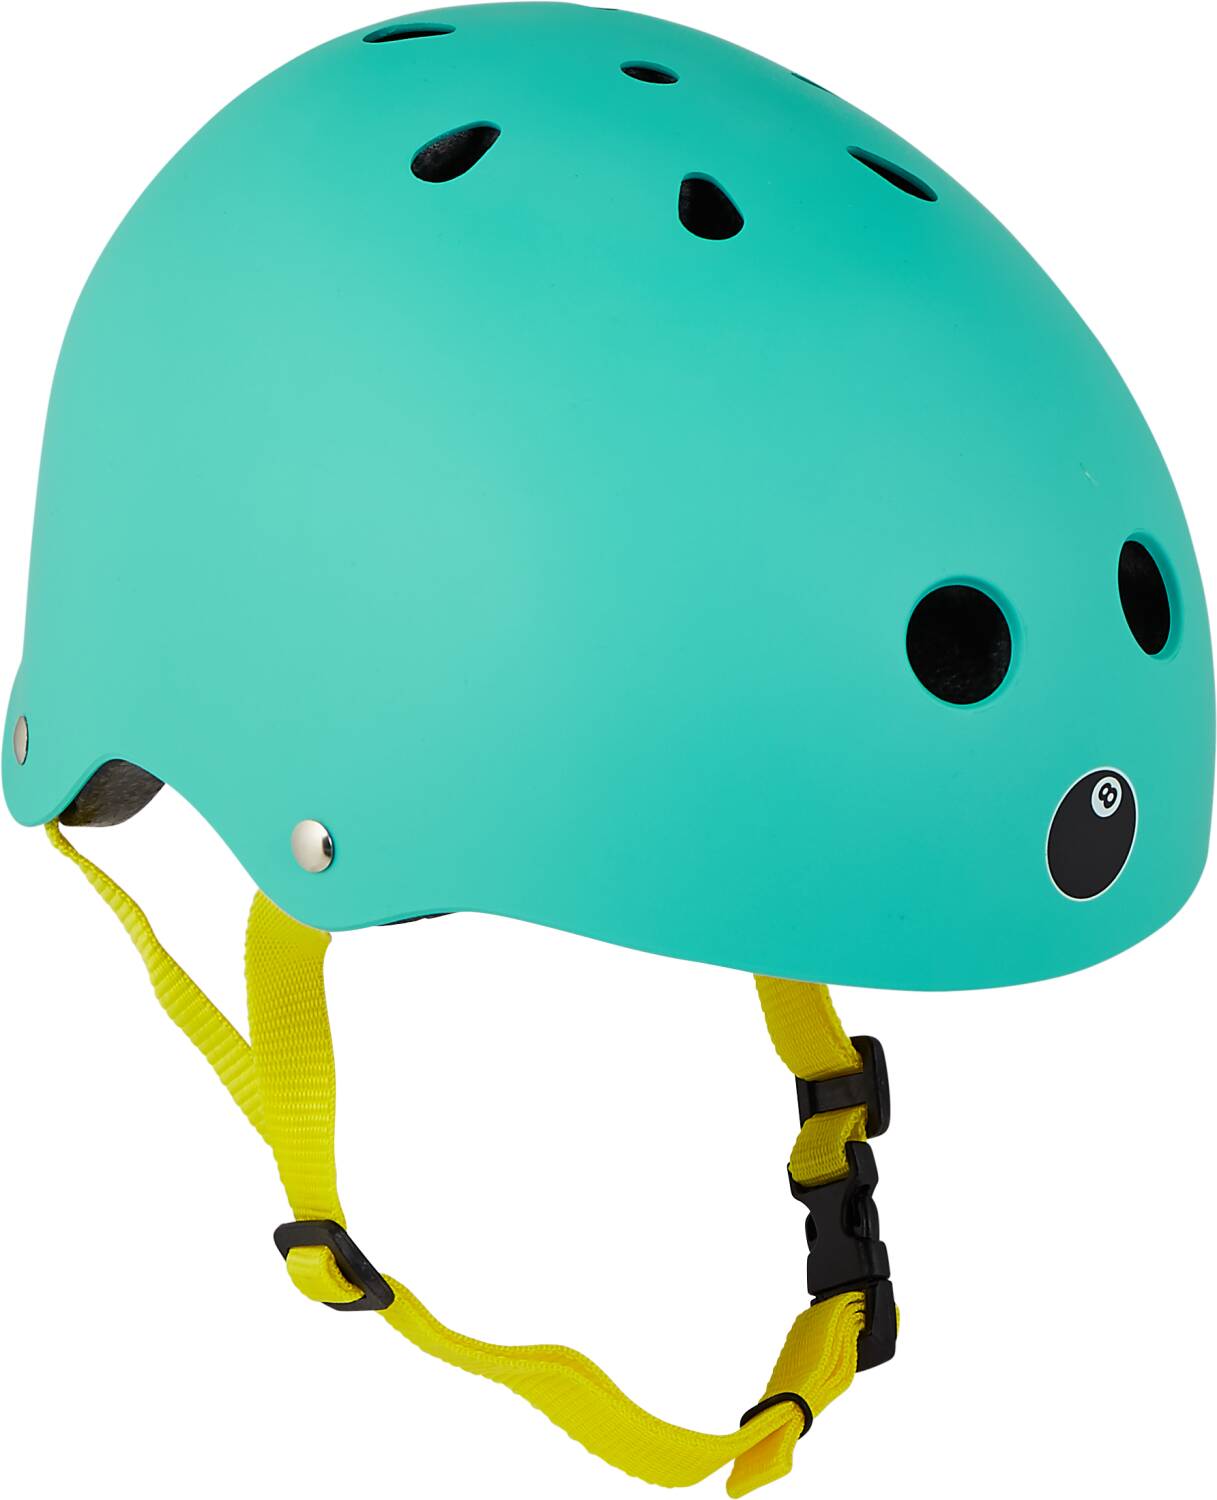 Eight Ball Skate Helmet - Teal